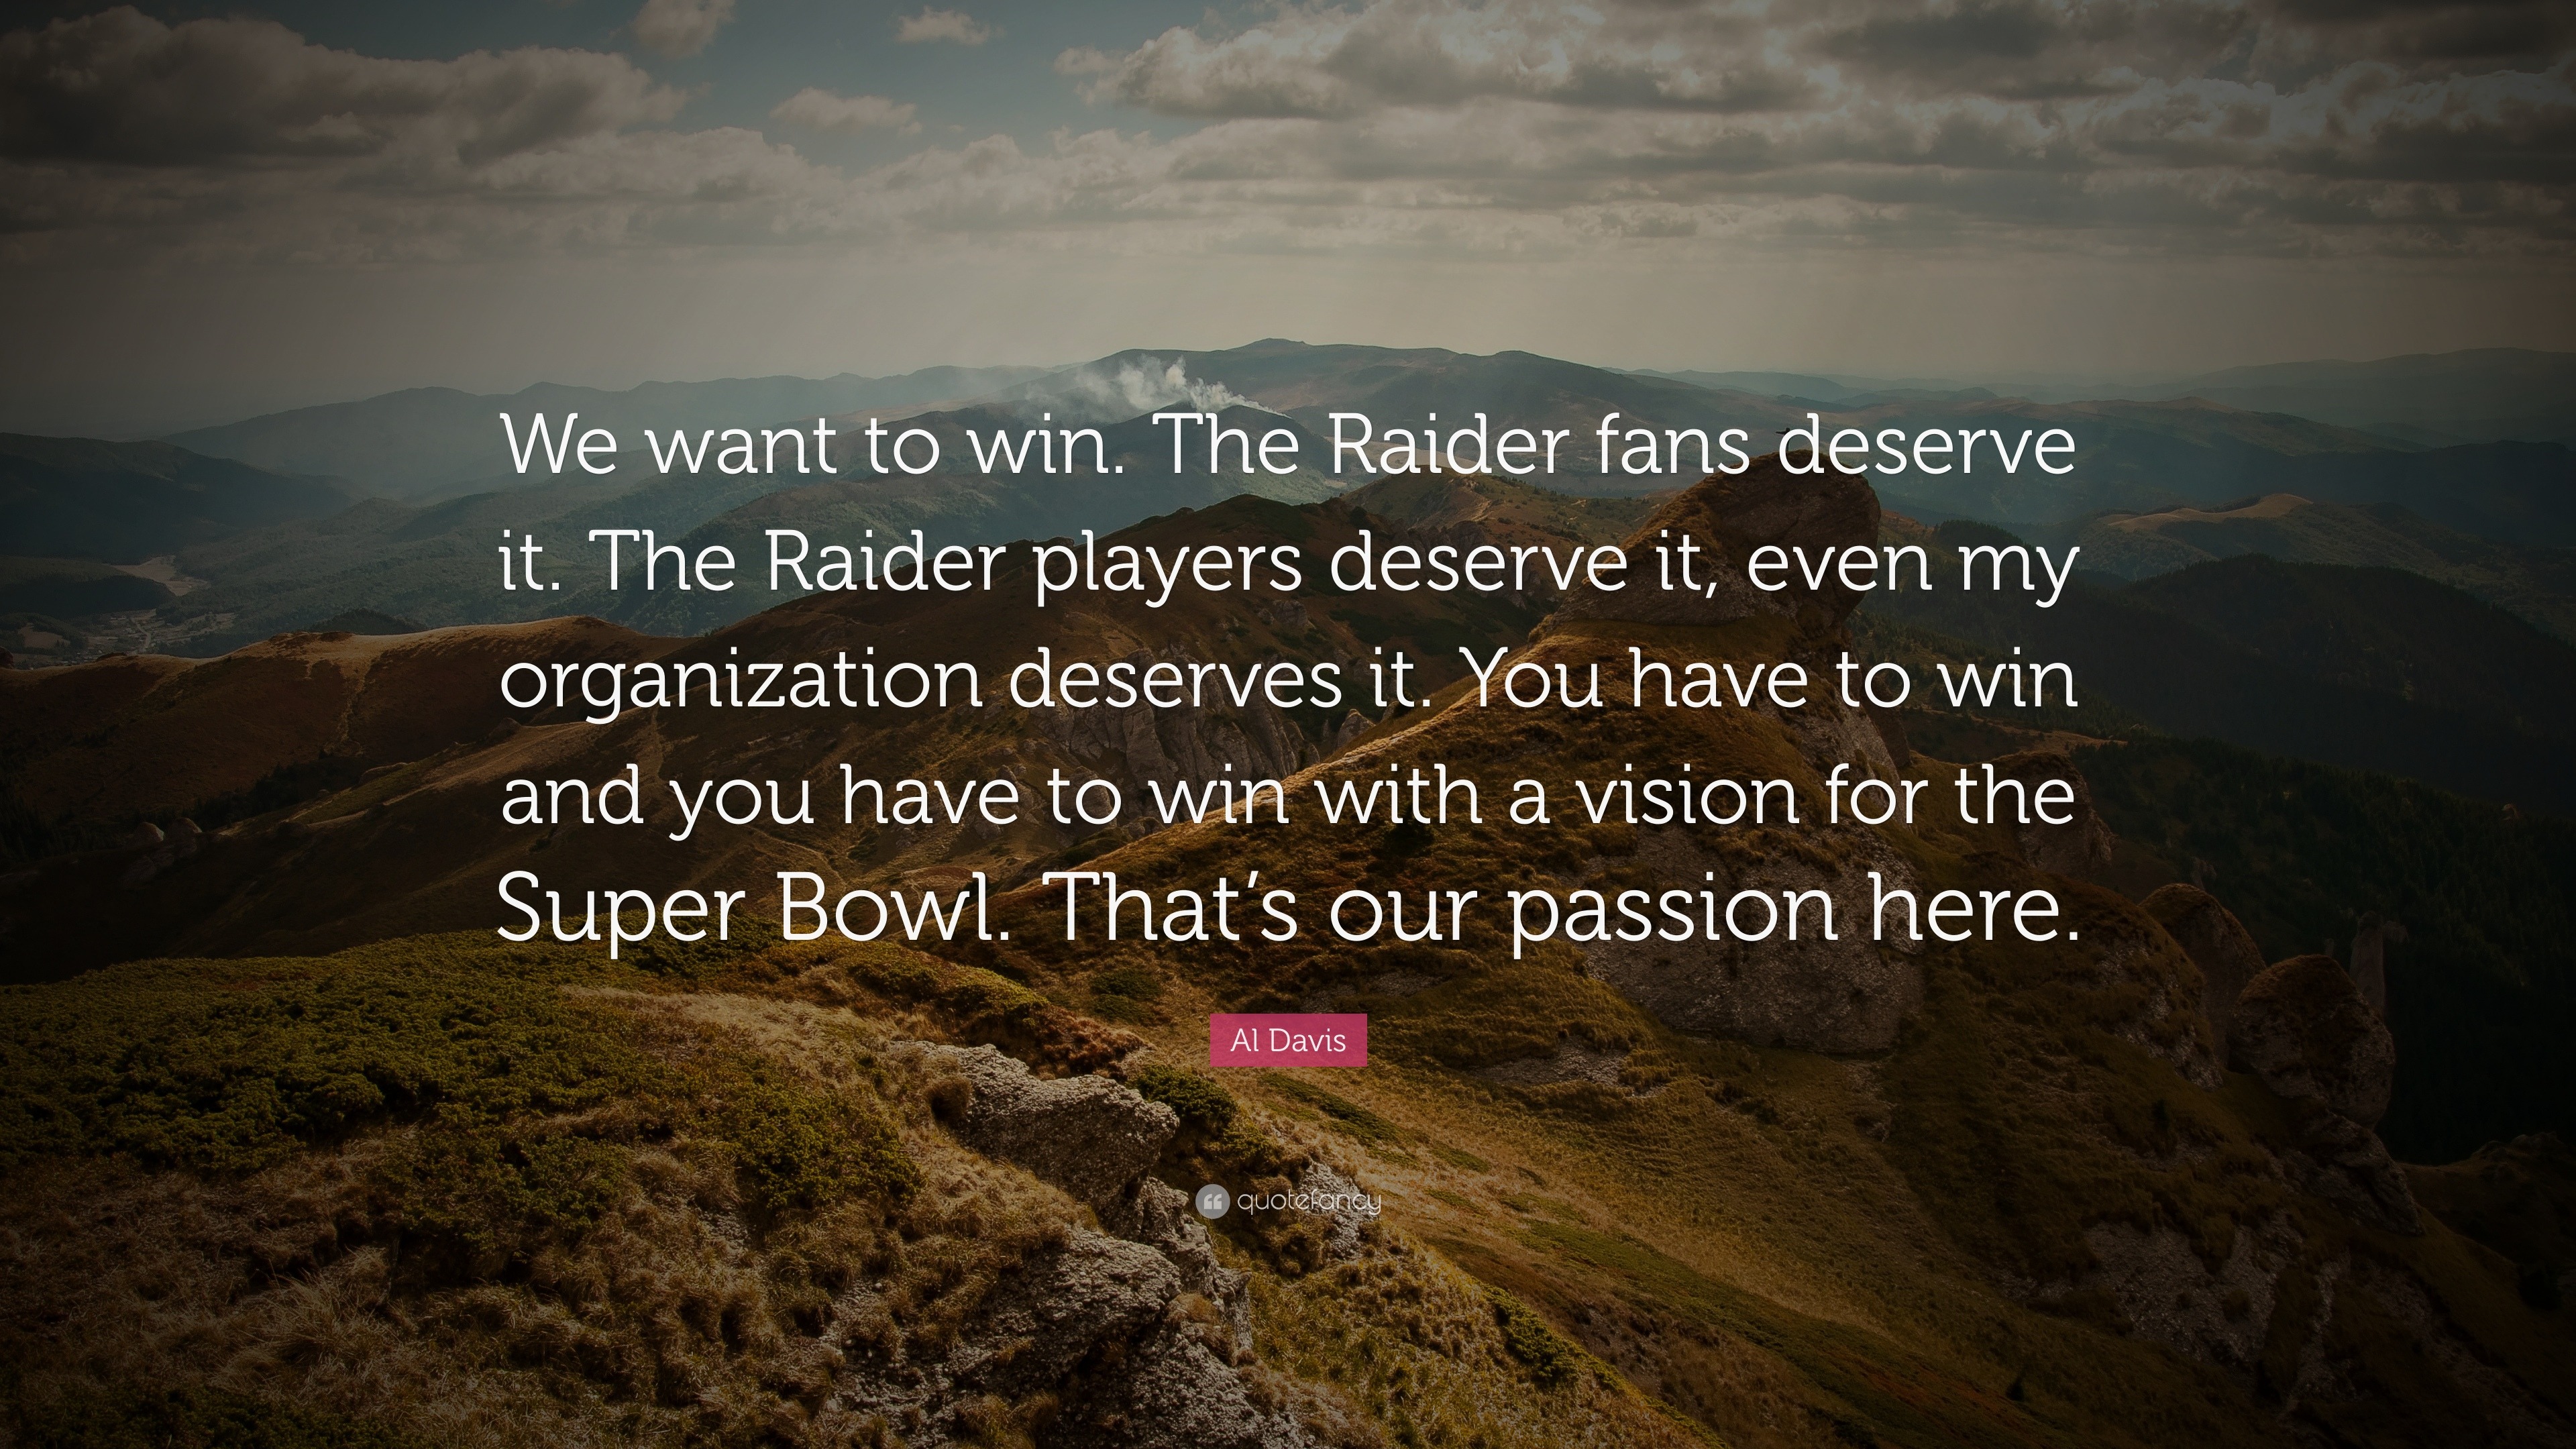 Al Davis Quote: “We want to win. The Raider fans deserve it. The